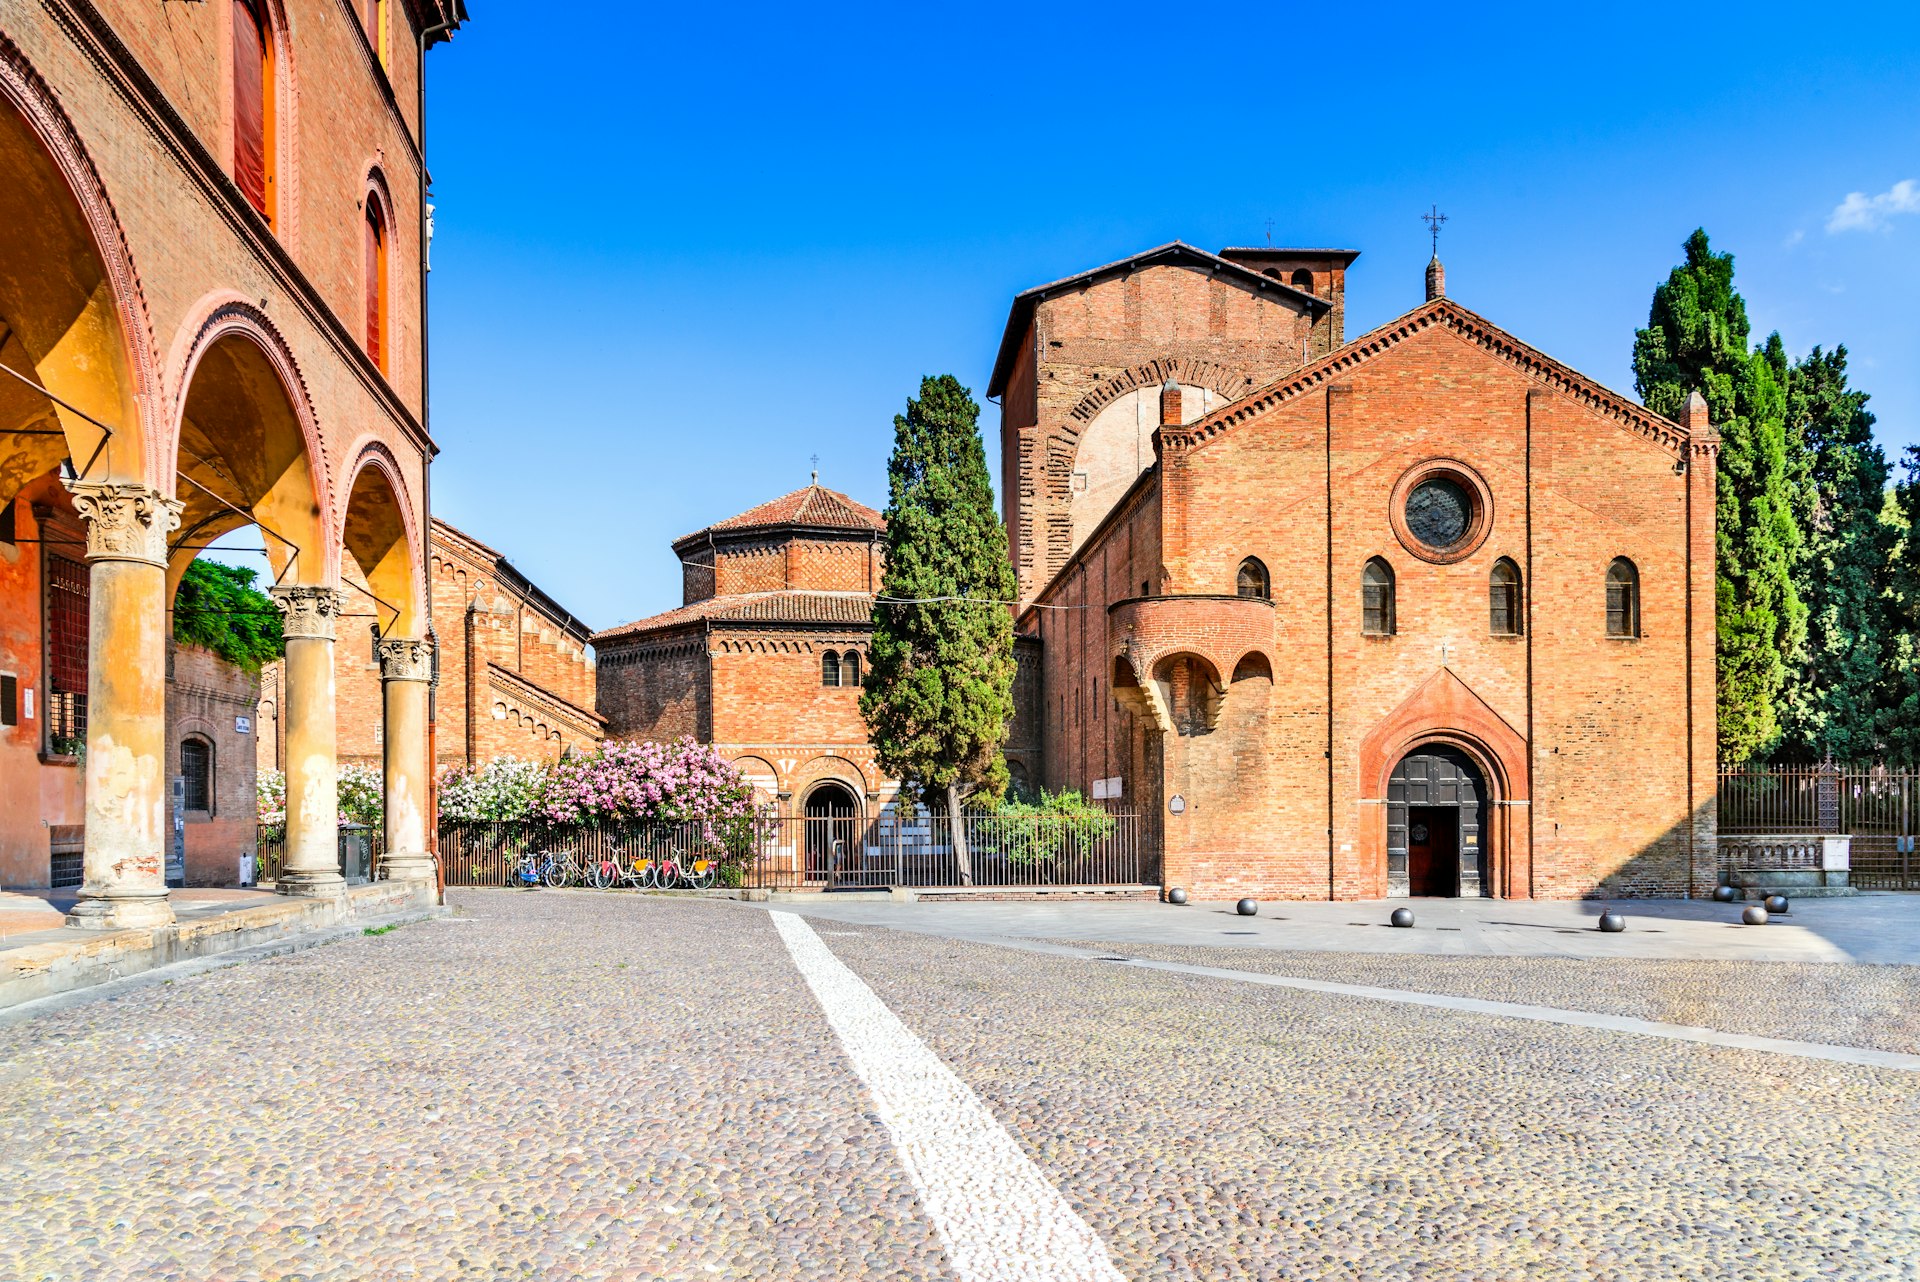 The basilica of Santo Stefano, Holy Jerusalem, known as Seven Churches. Emilia-Romagna region